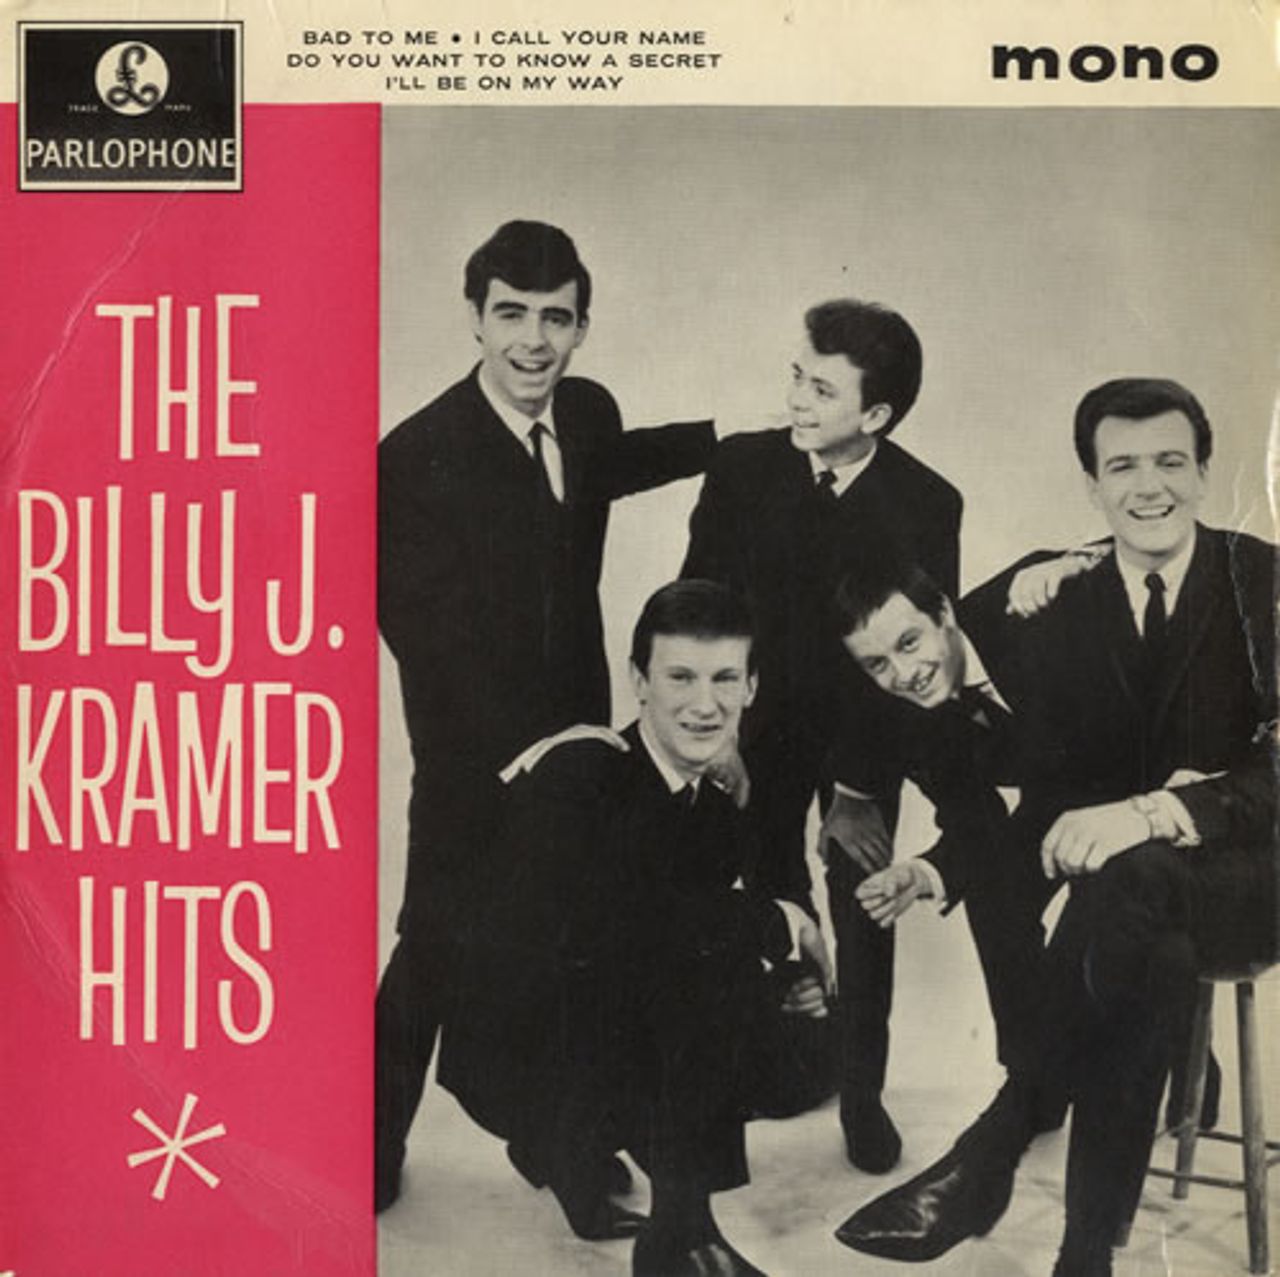 Billy J. Kramer u0026 The Dakotas The Billy J. Kramer Hits EP UK 7 vinyl —  RareVinyl.com